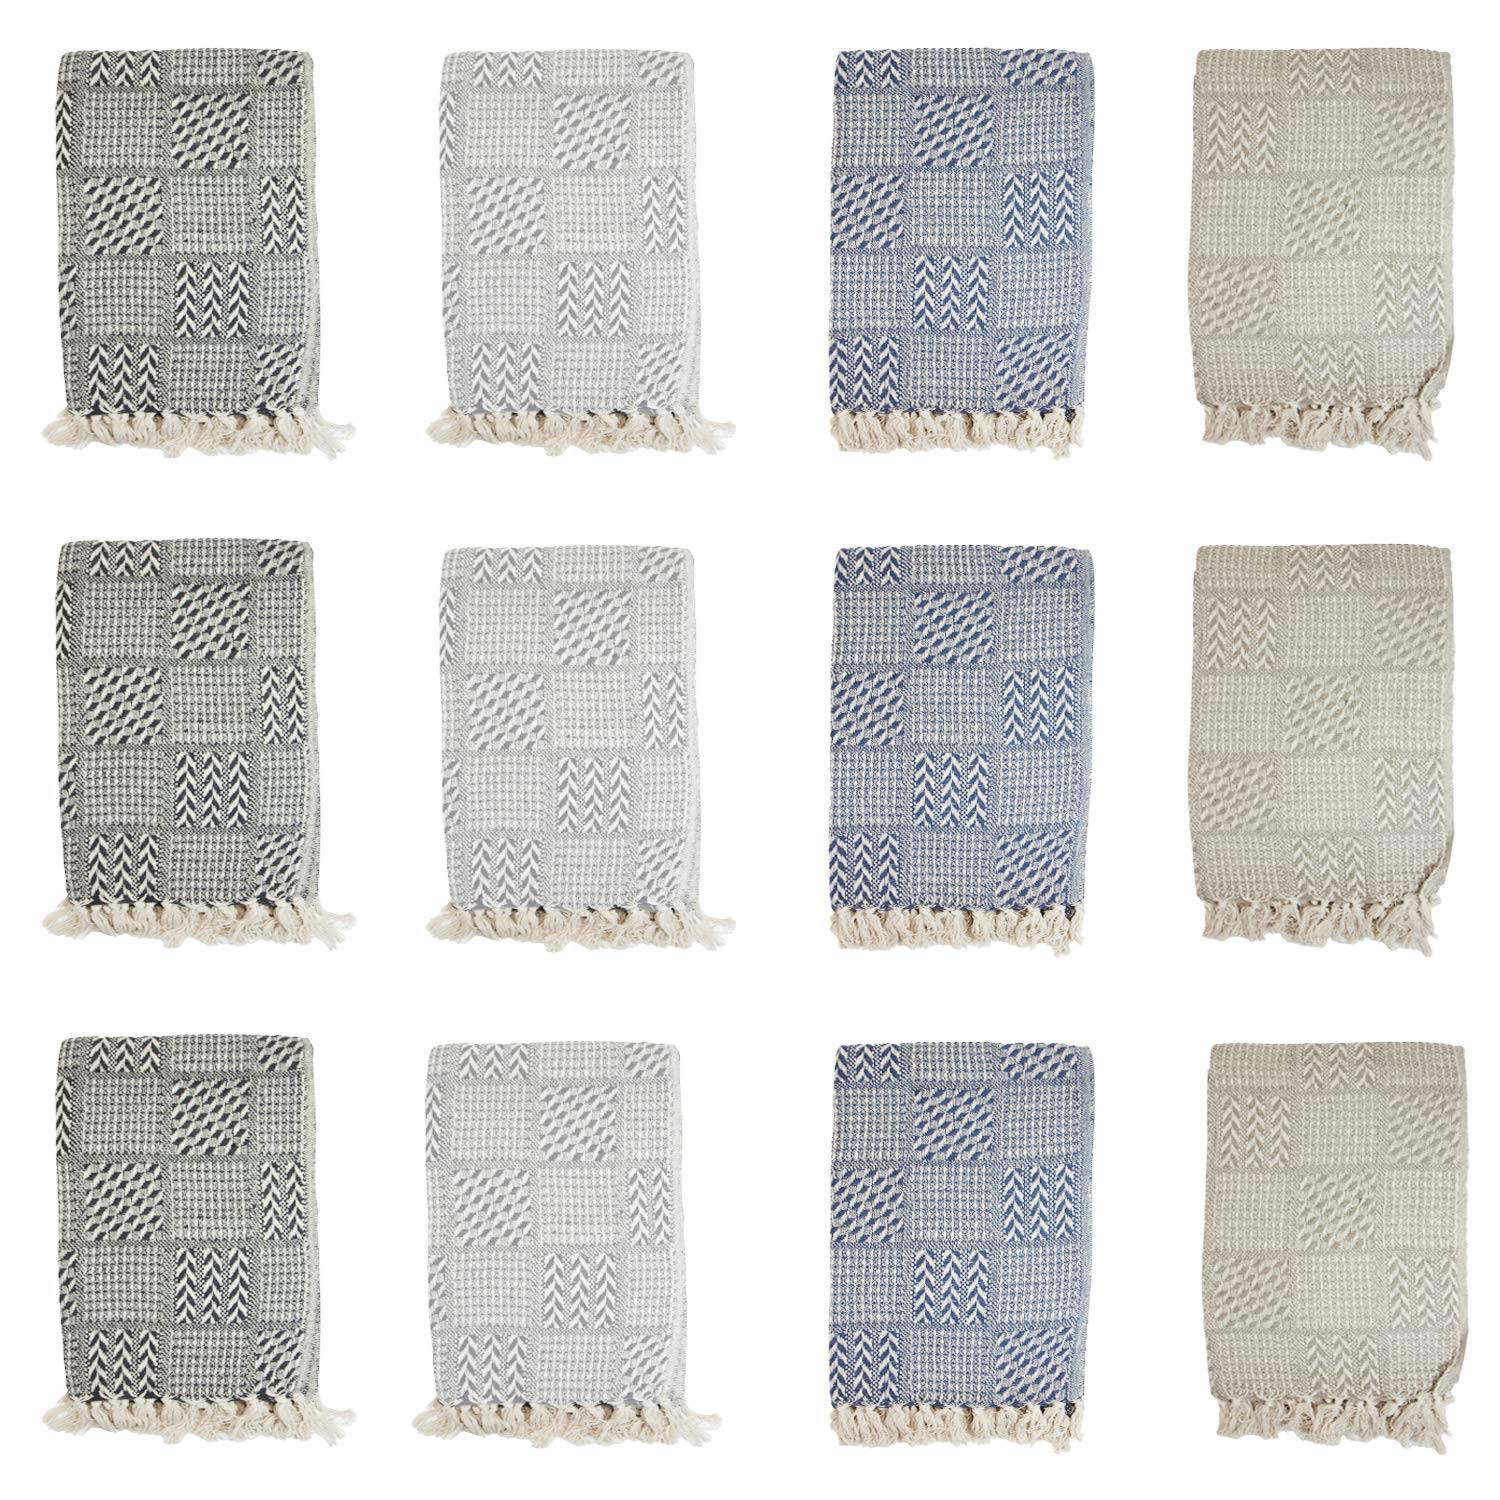 50x70 Woven Tassel Throw Blanket - Taupe